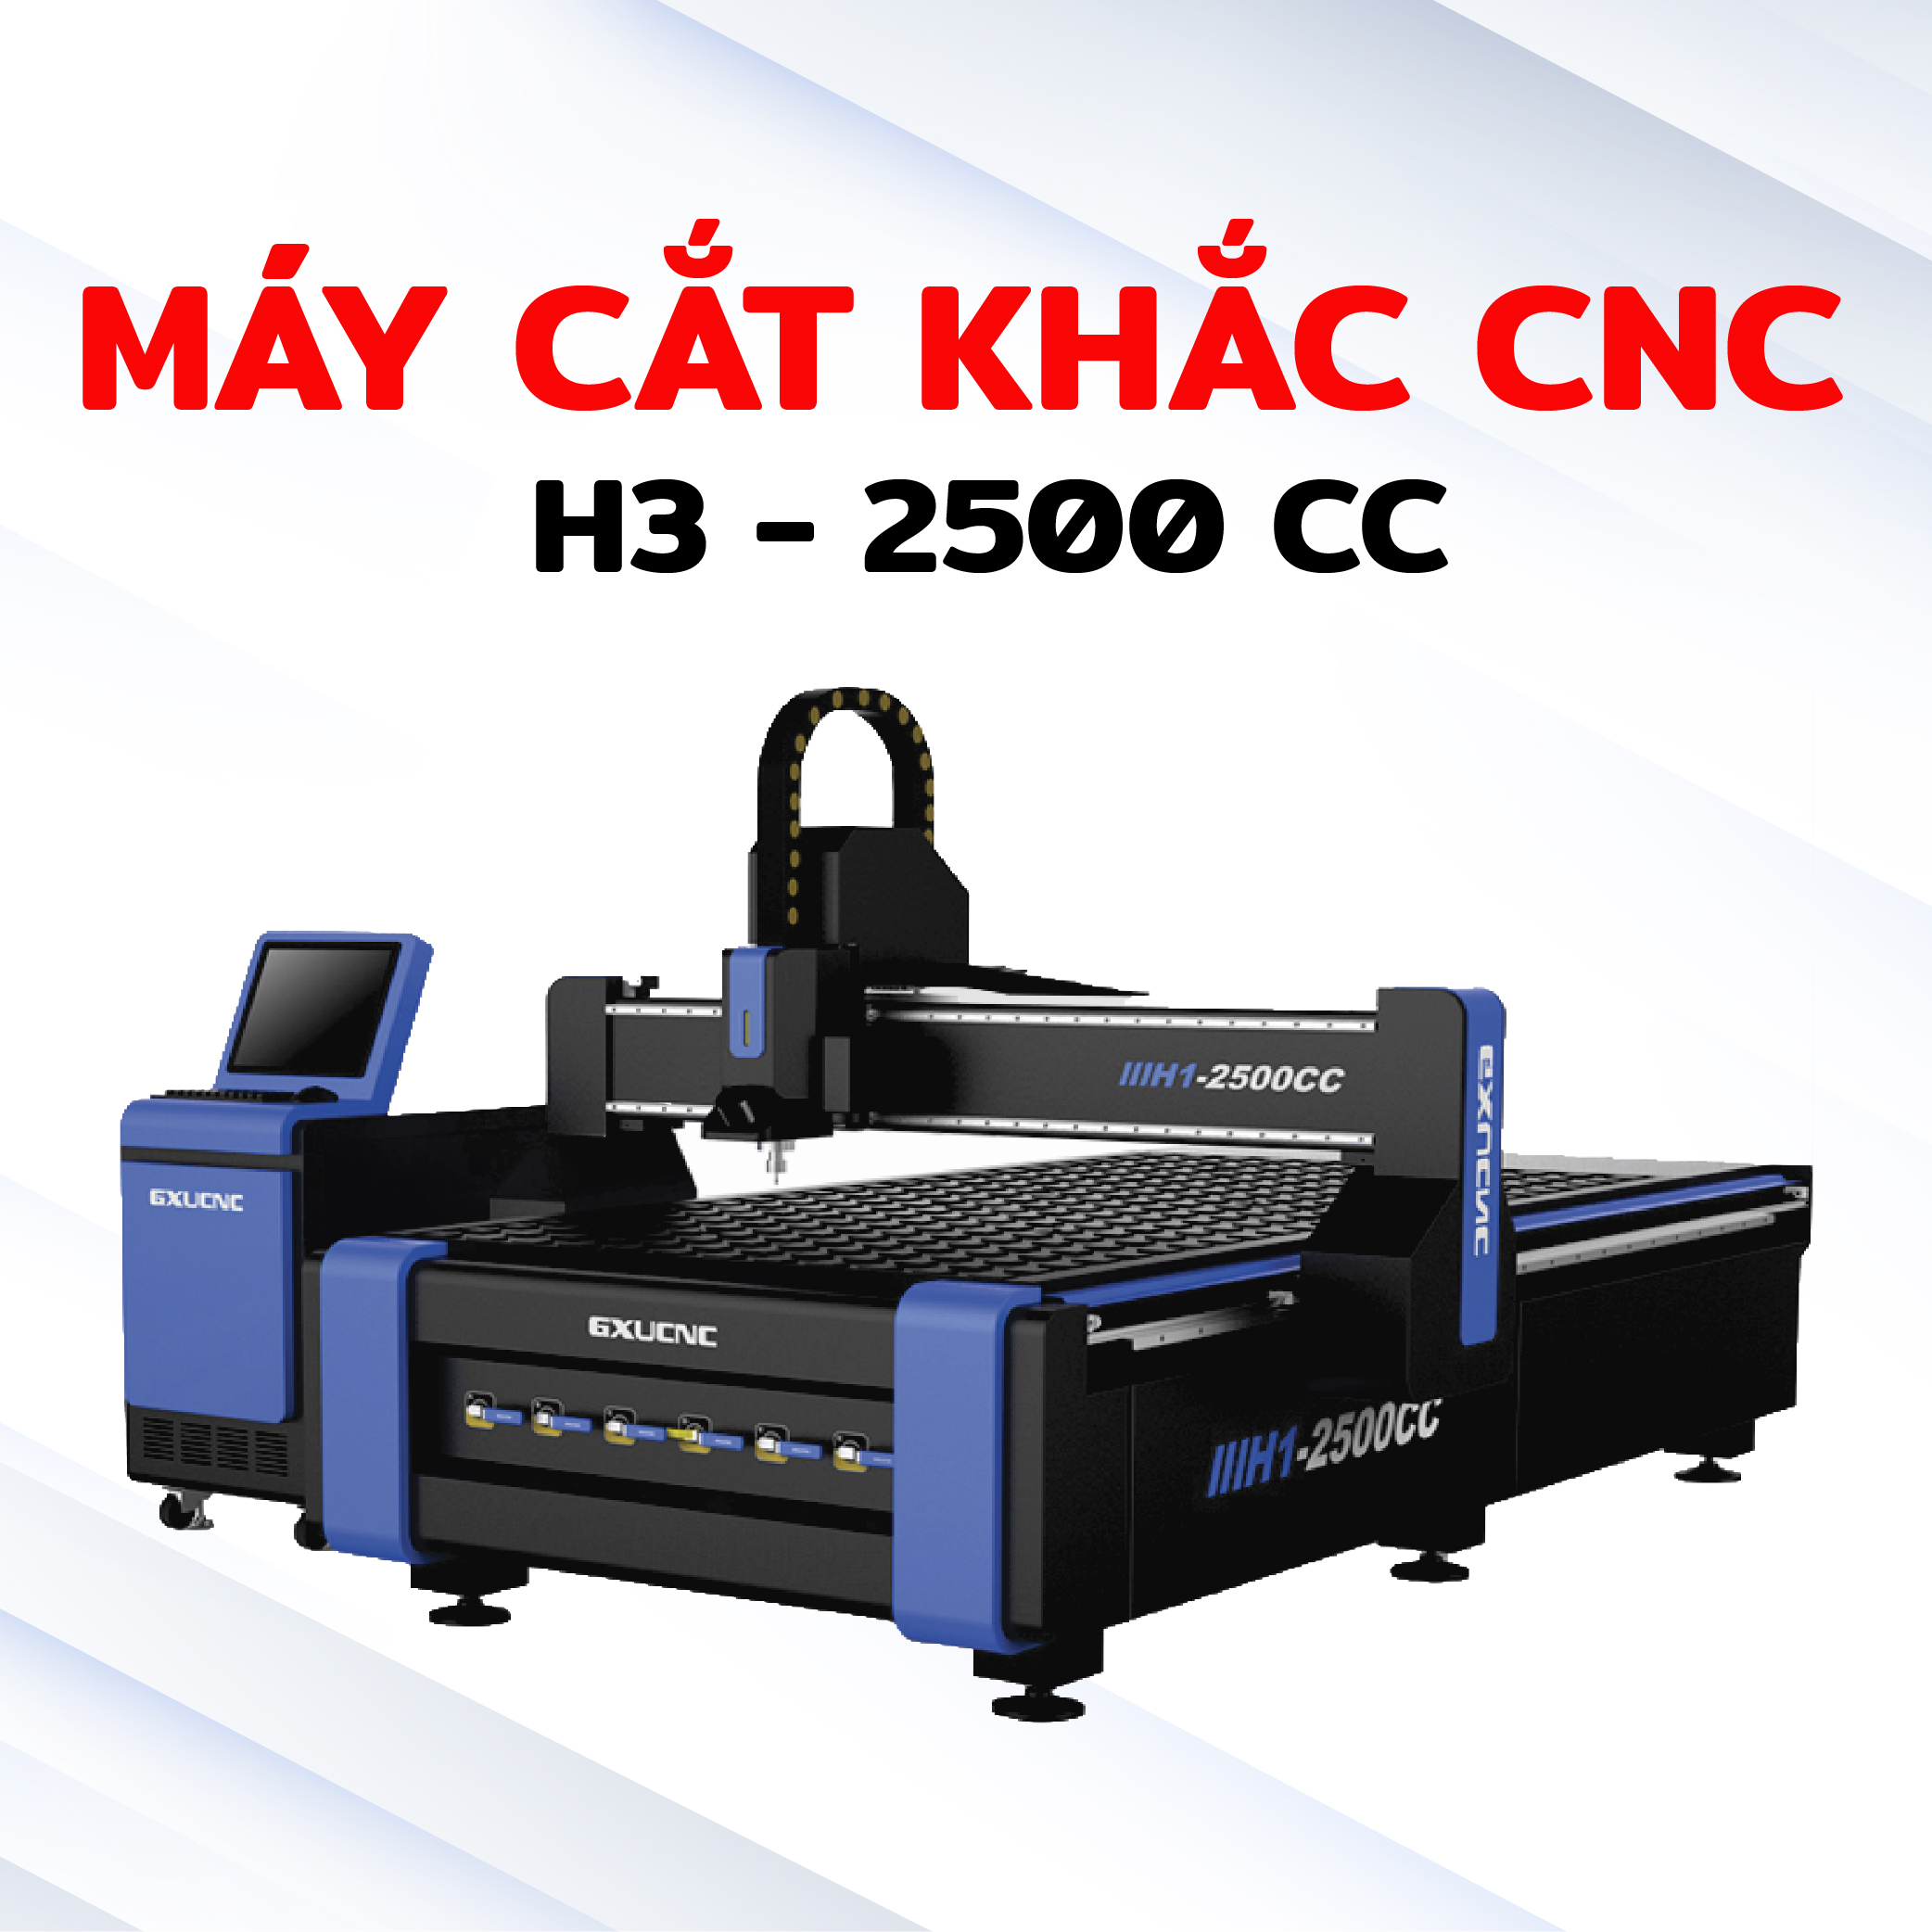 Máy cắt khắc CNC H3 2500 cc